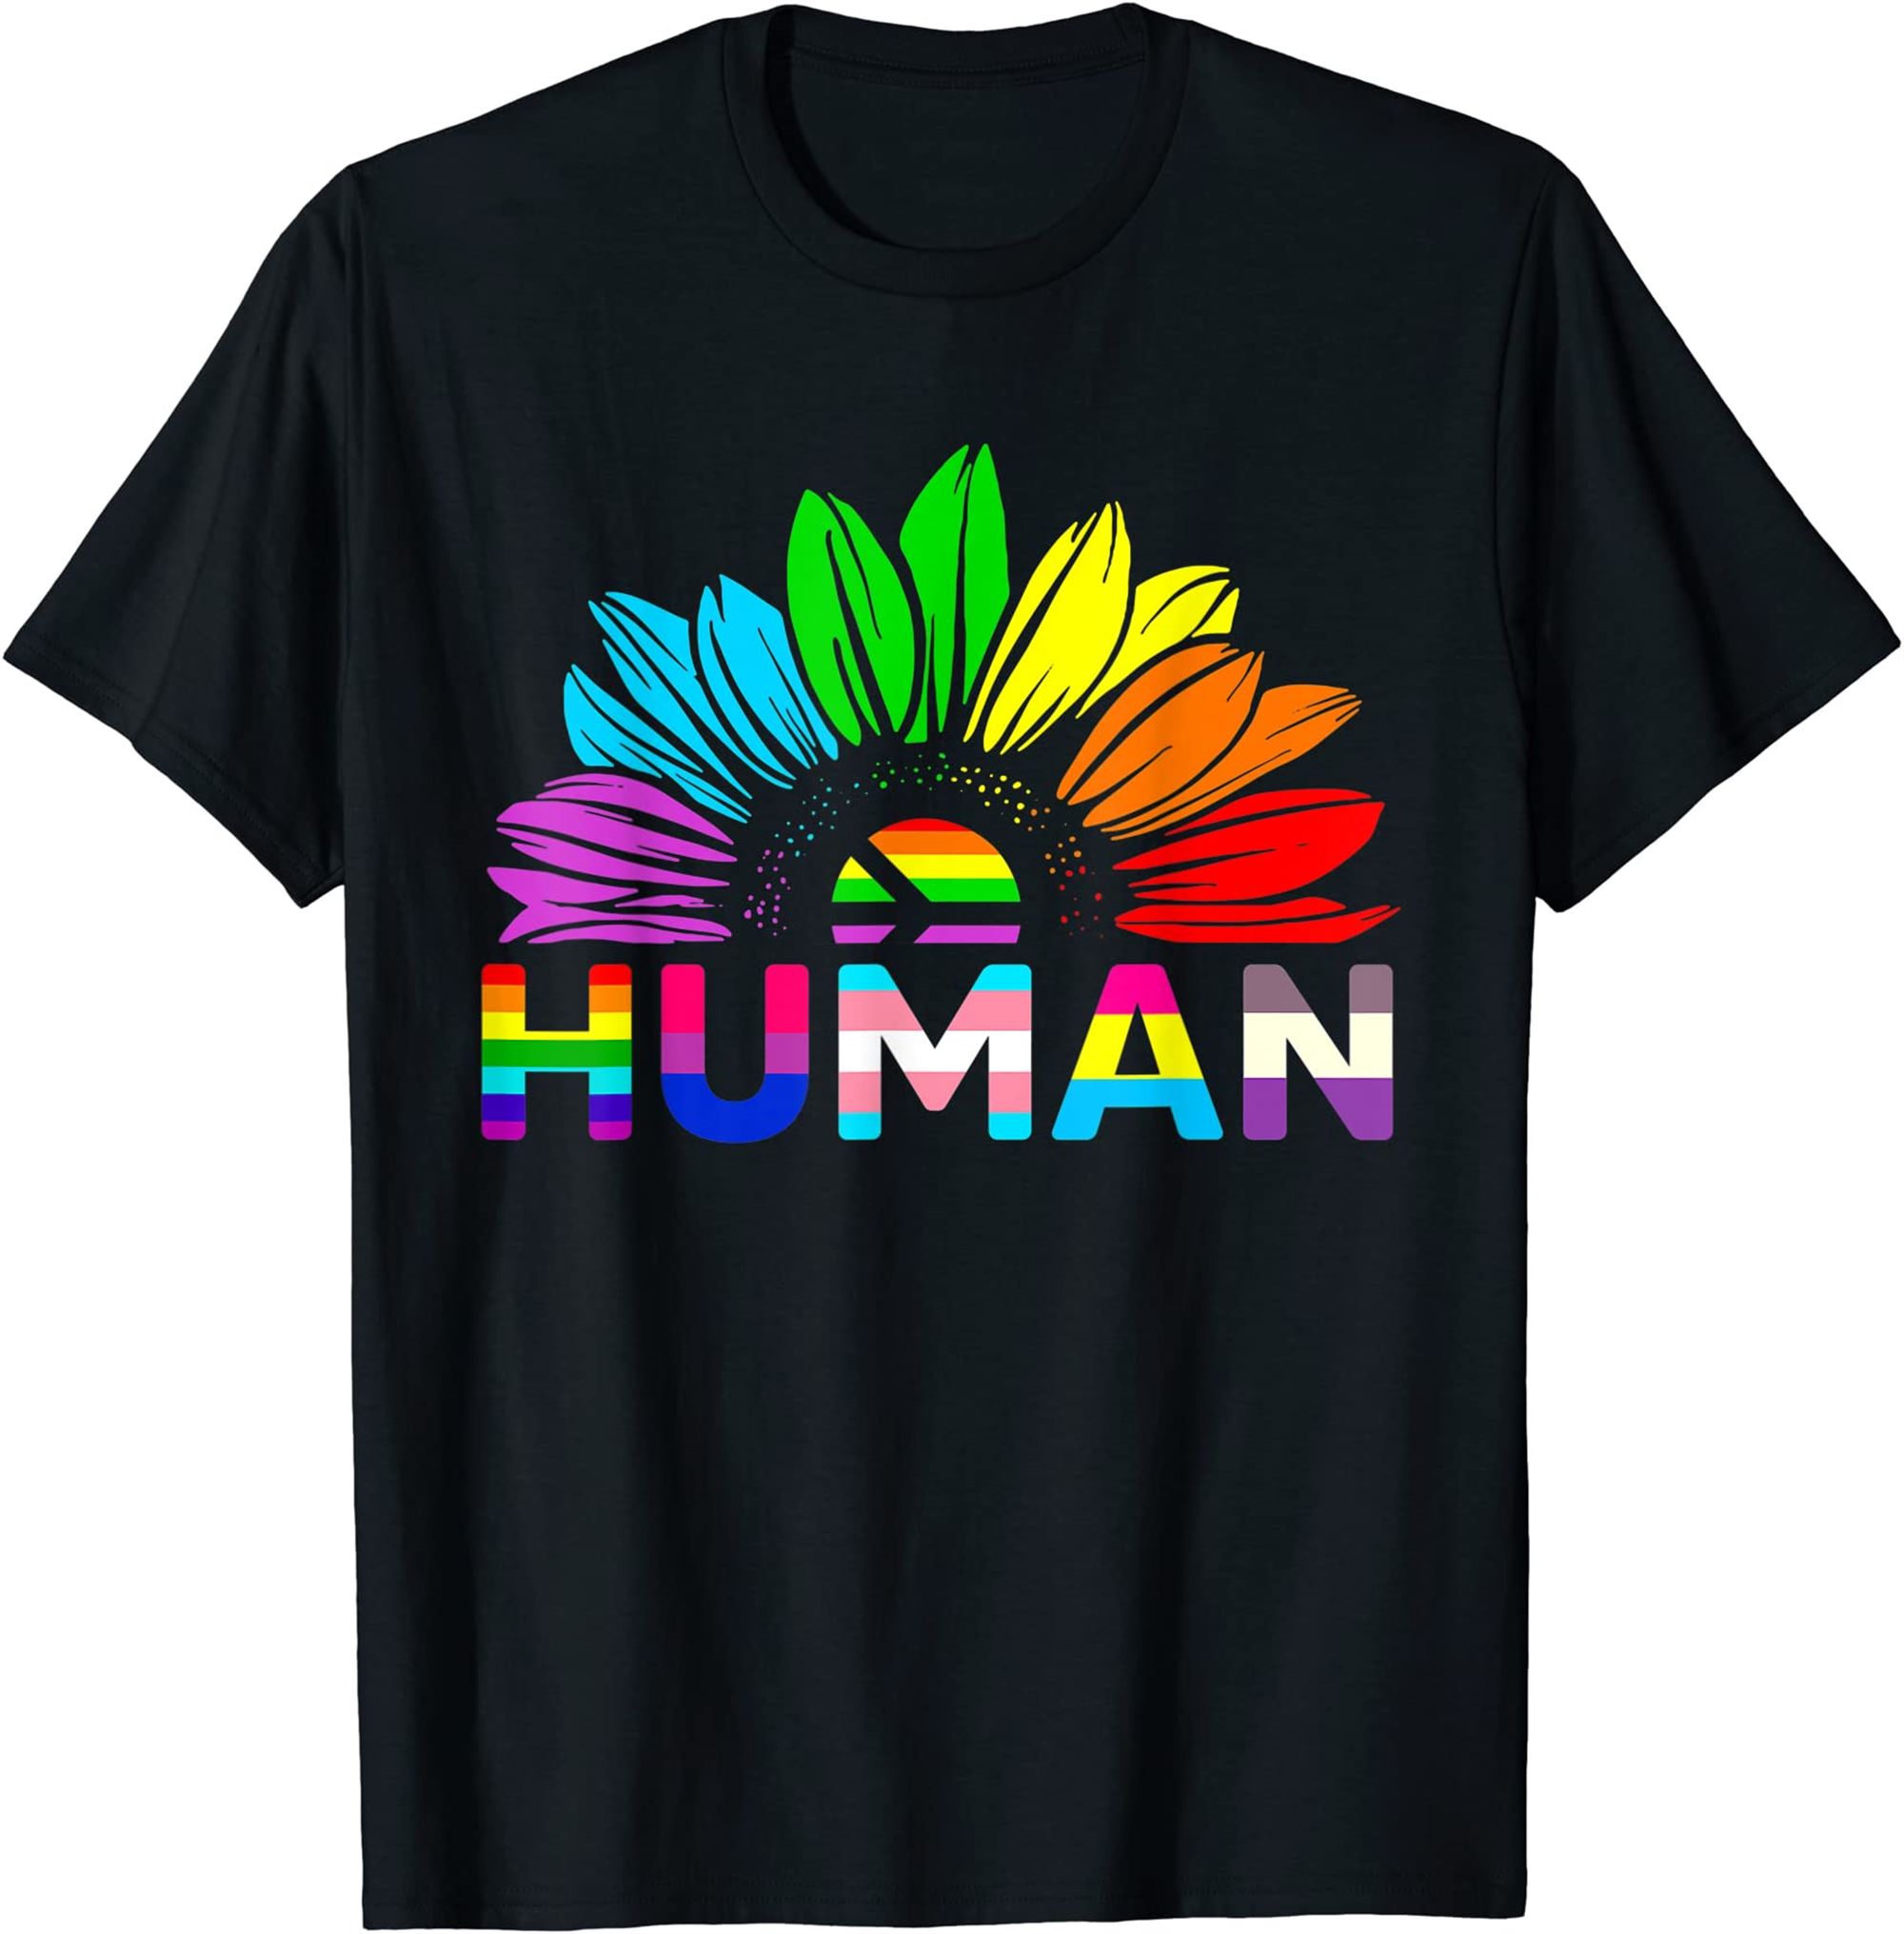 Human Sunflower Rainbow Lgbt Flag Gay Pride Proud Lgbtq T-shirt Full Size Up To 5xl